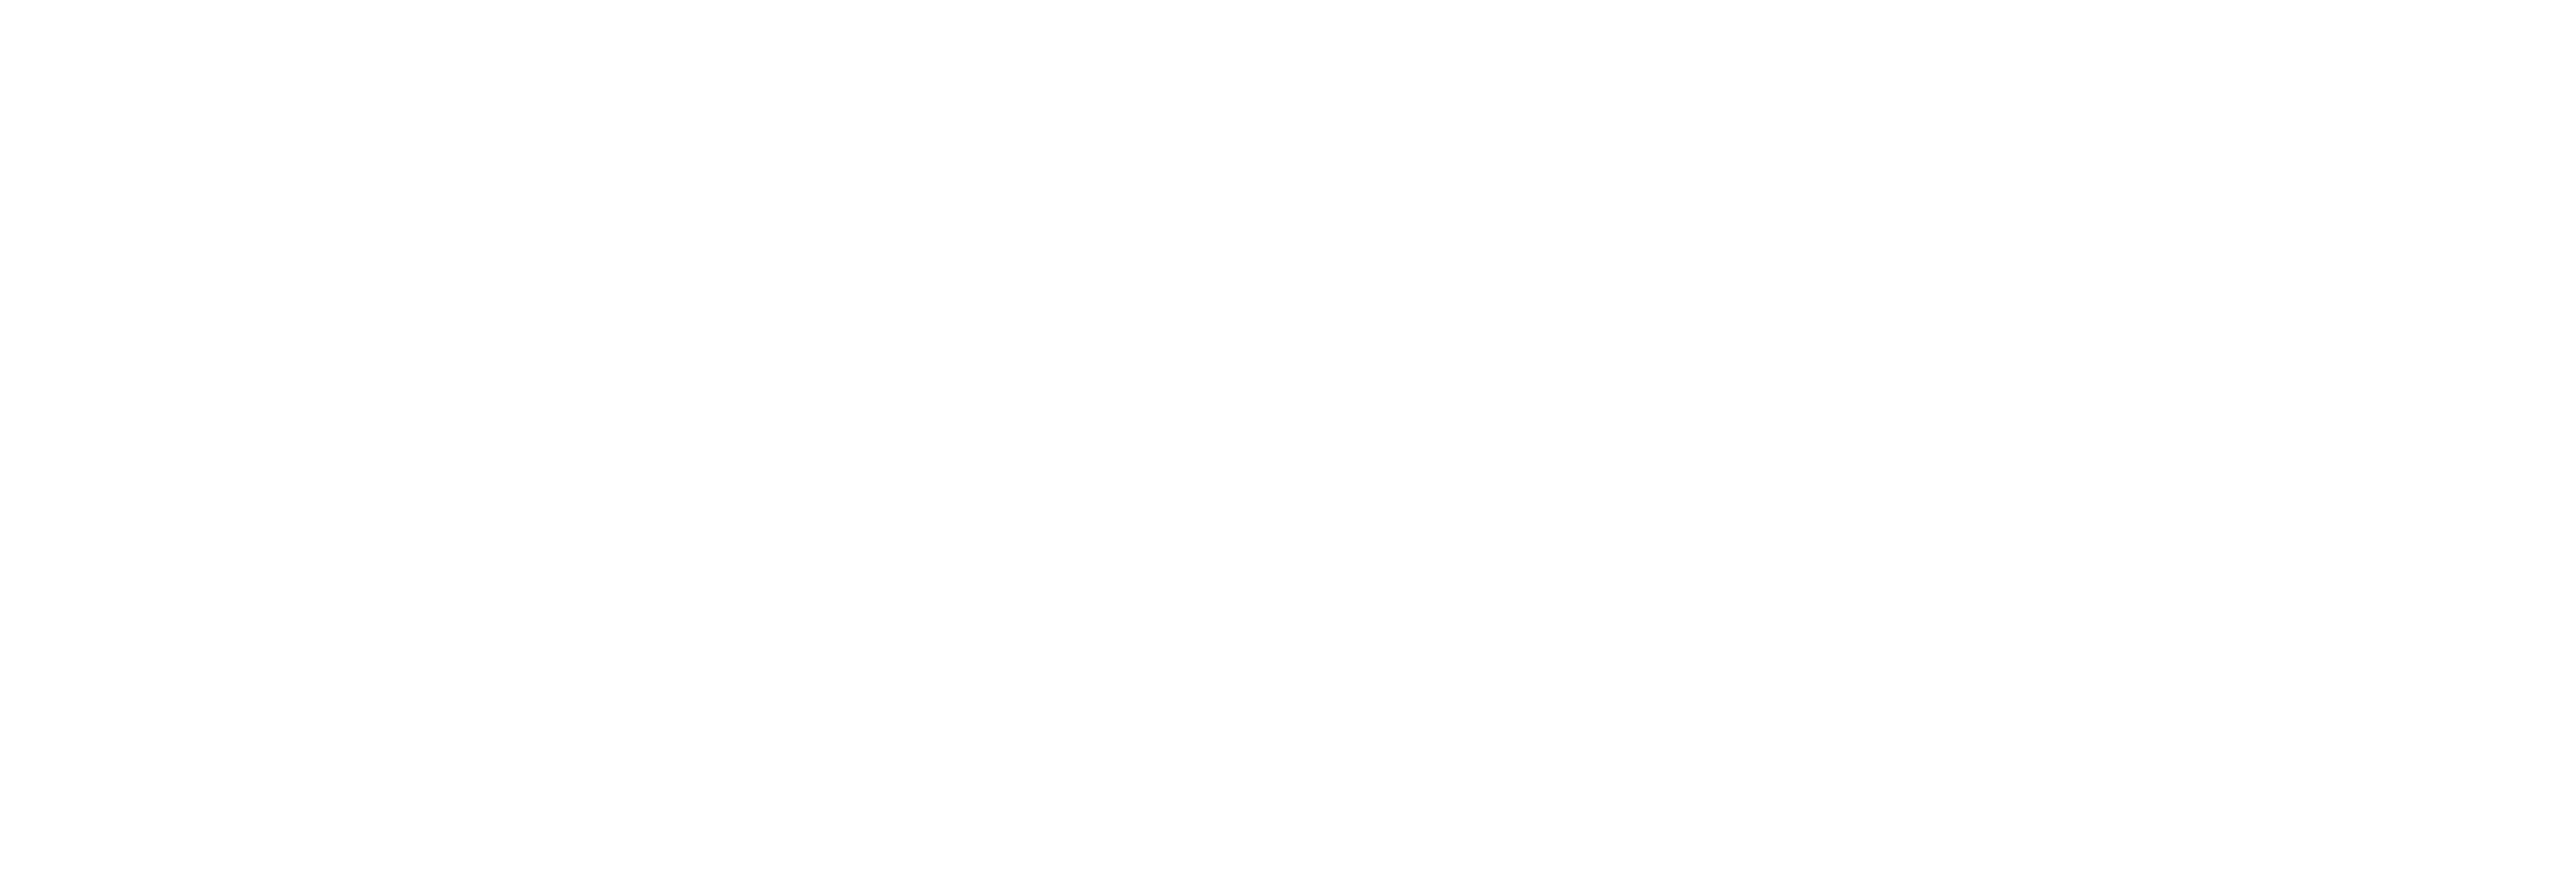 PCI Government Services